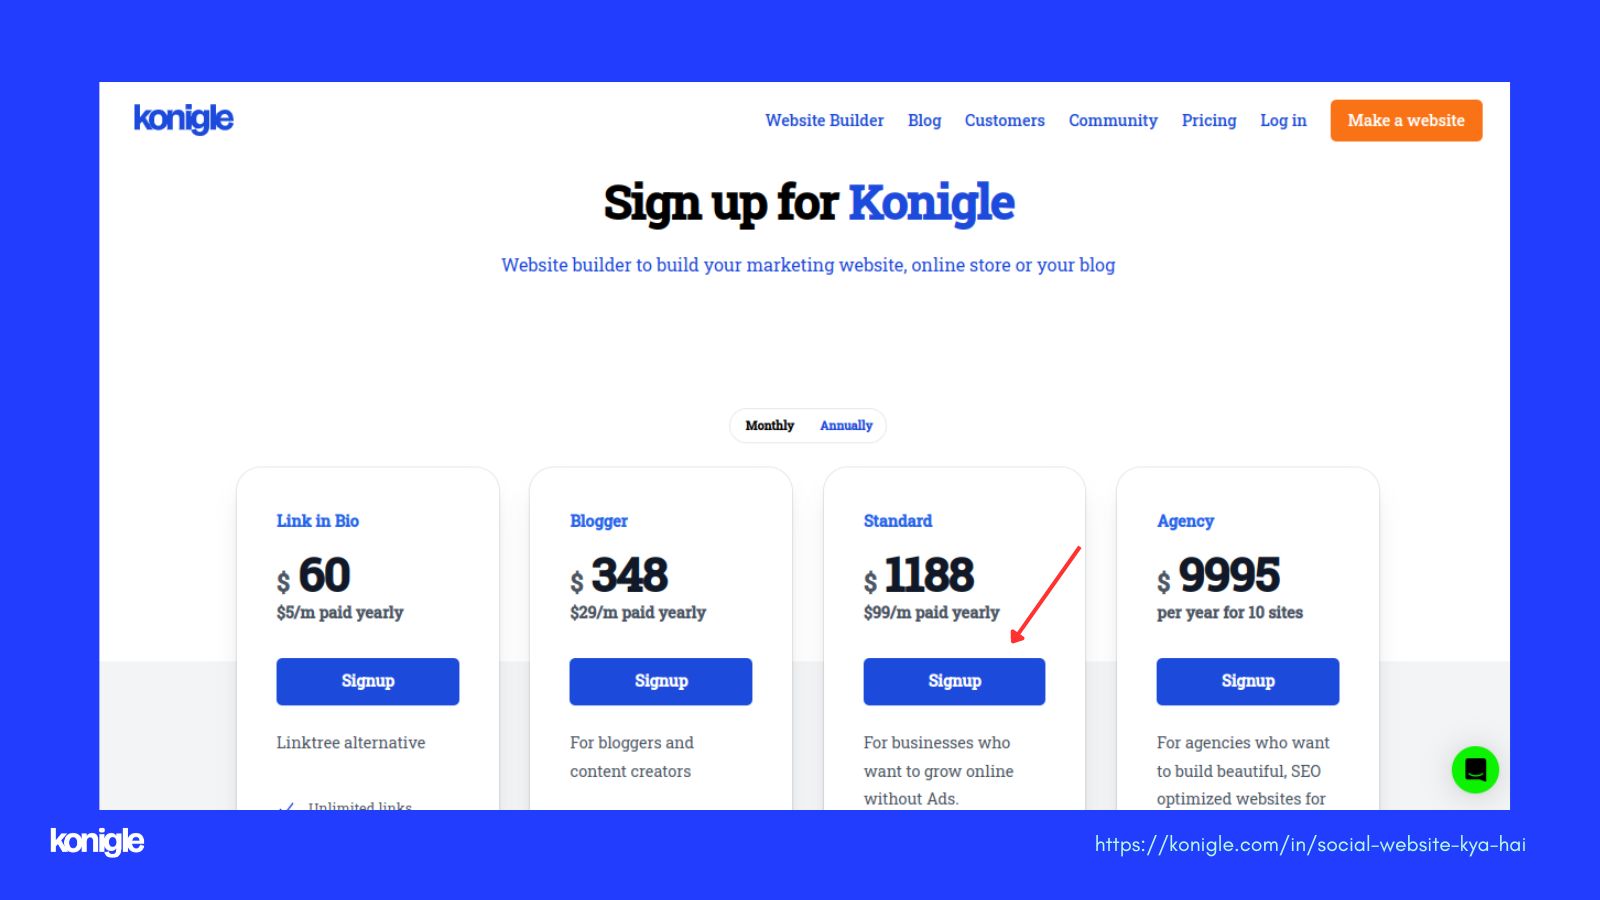 Sign up option on the konigle website